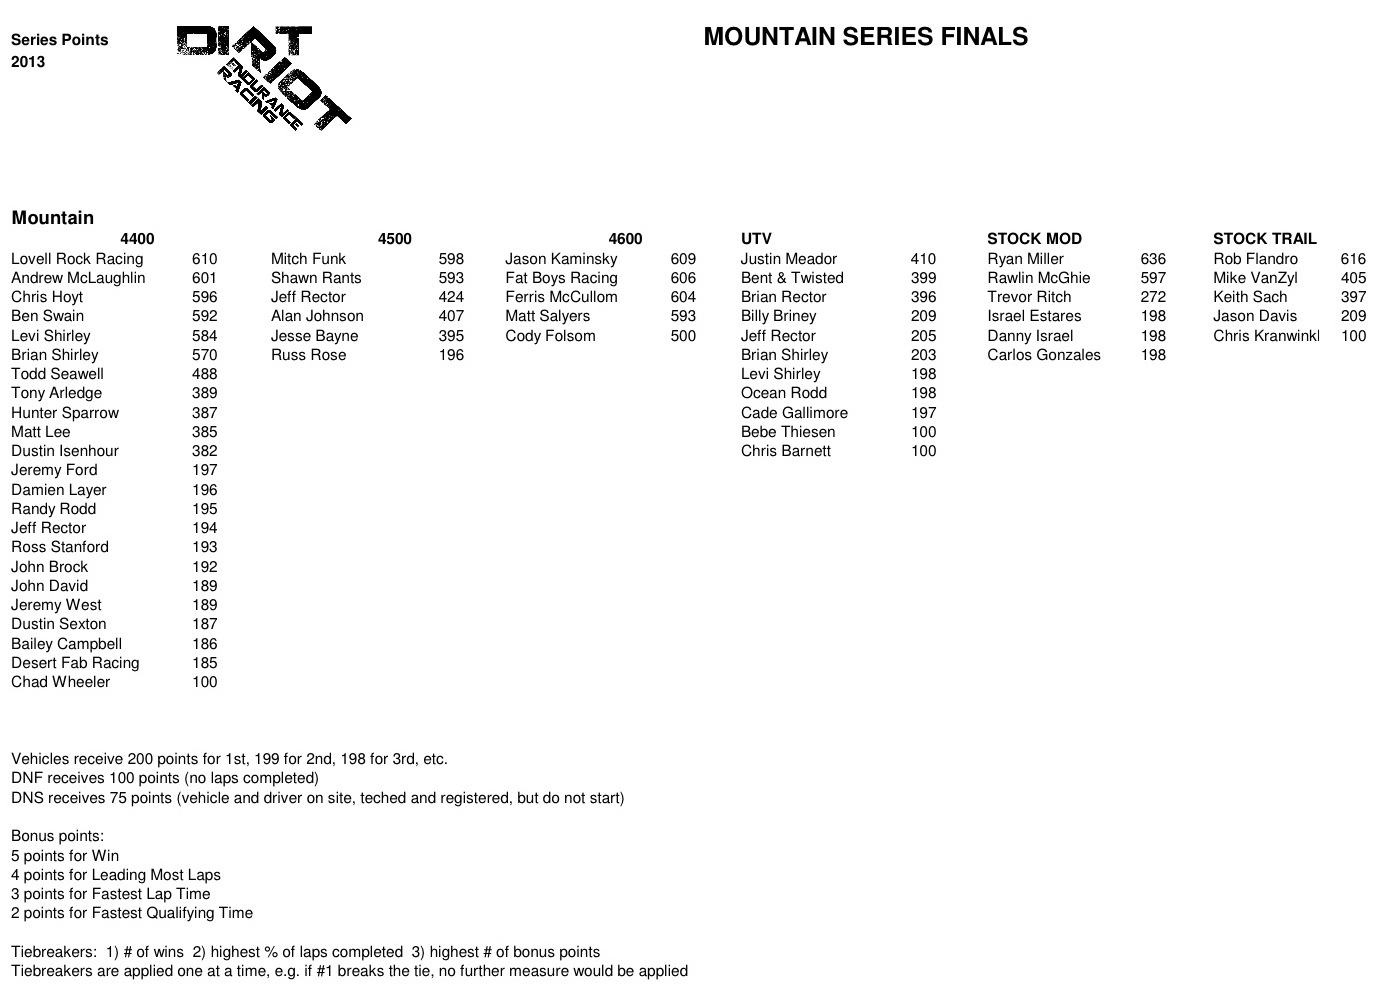 Mountain Series 2013 Final